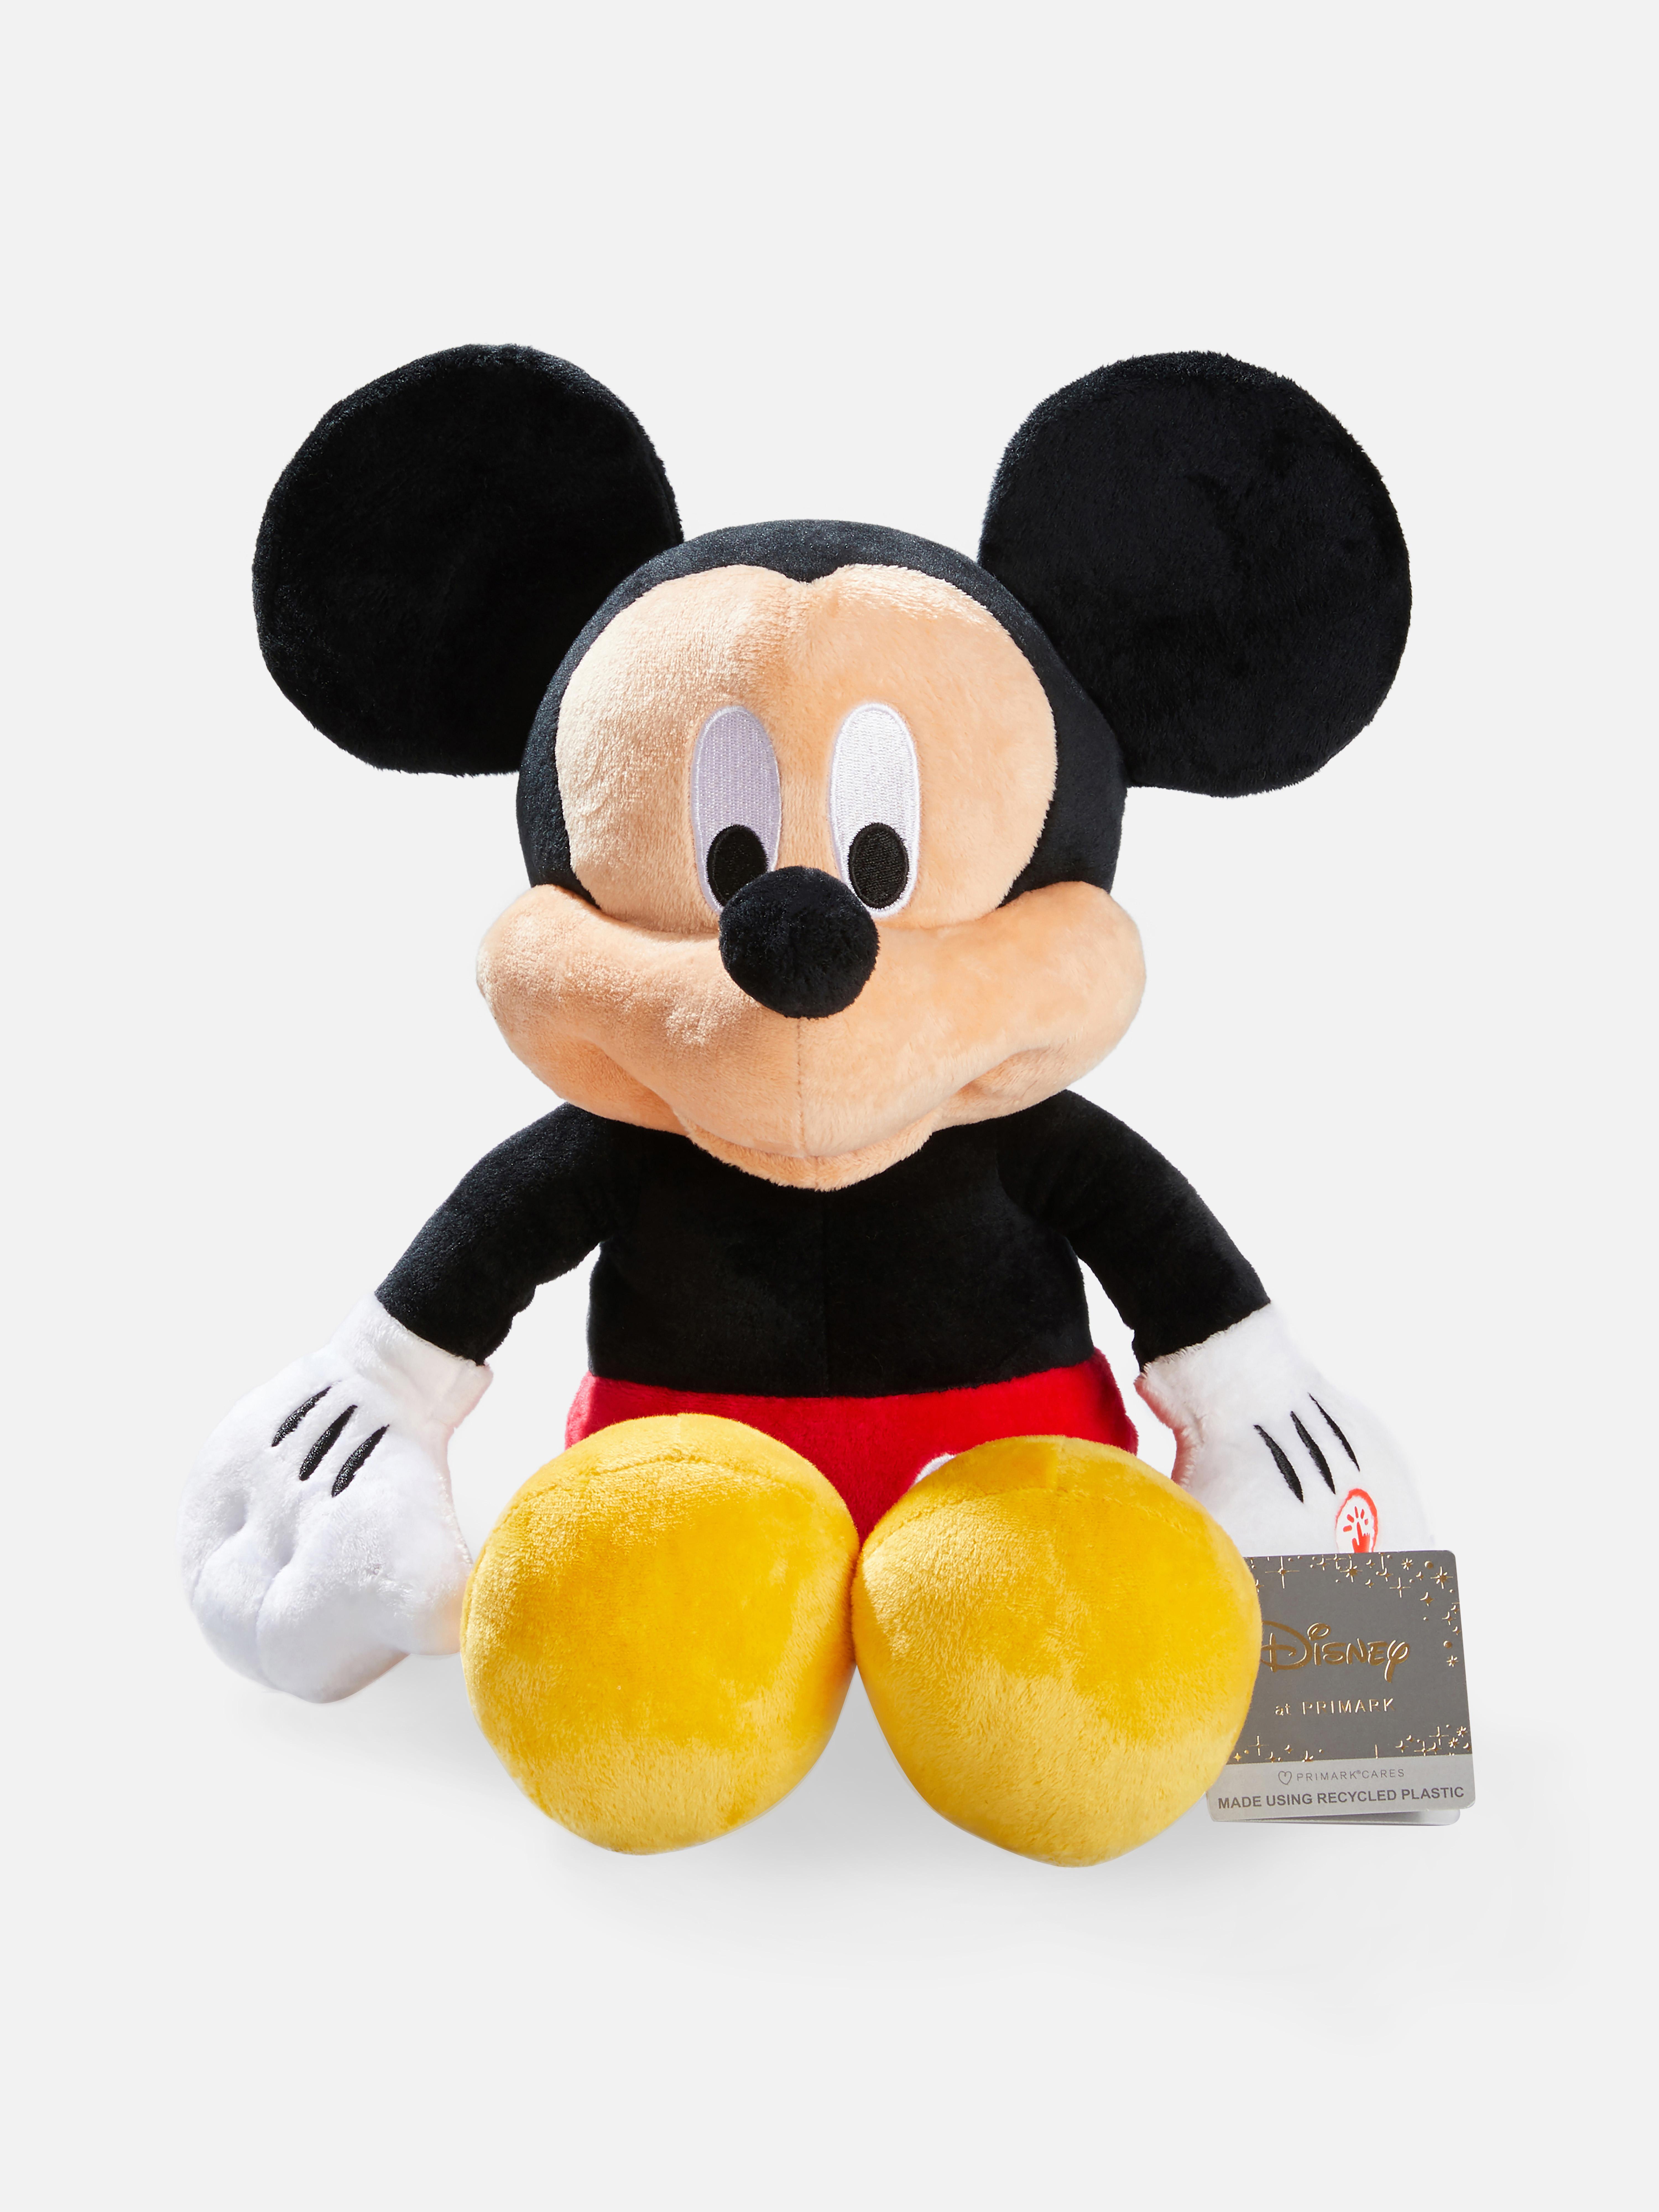 Disney's Mickey Mouse Plush Toy Black